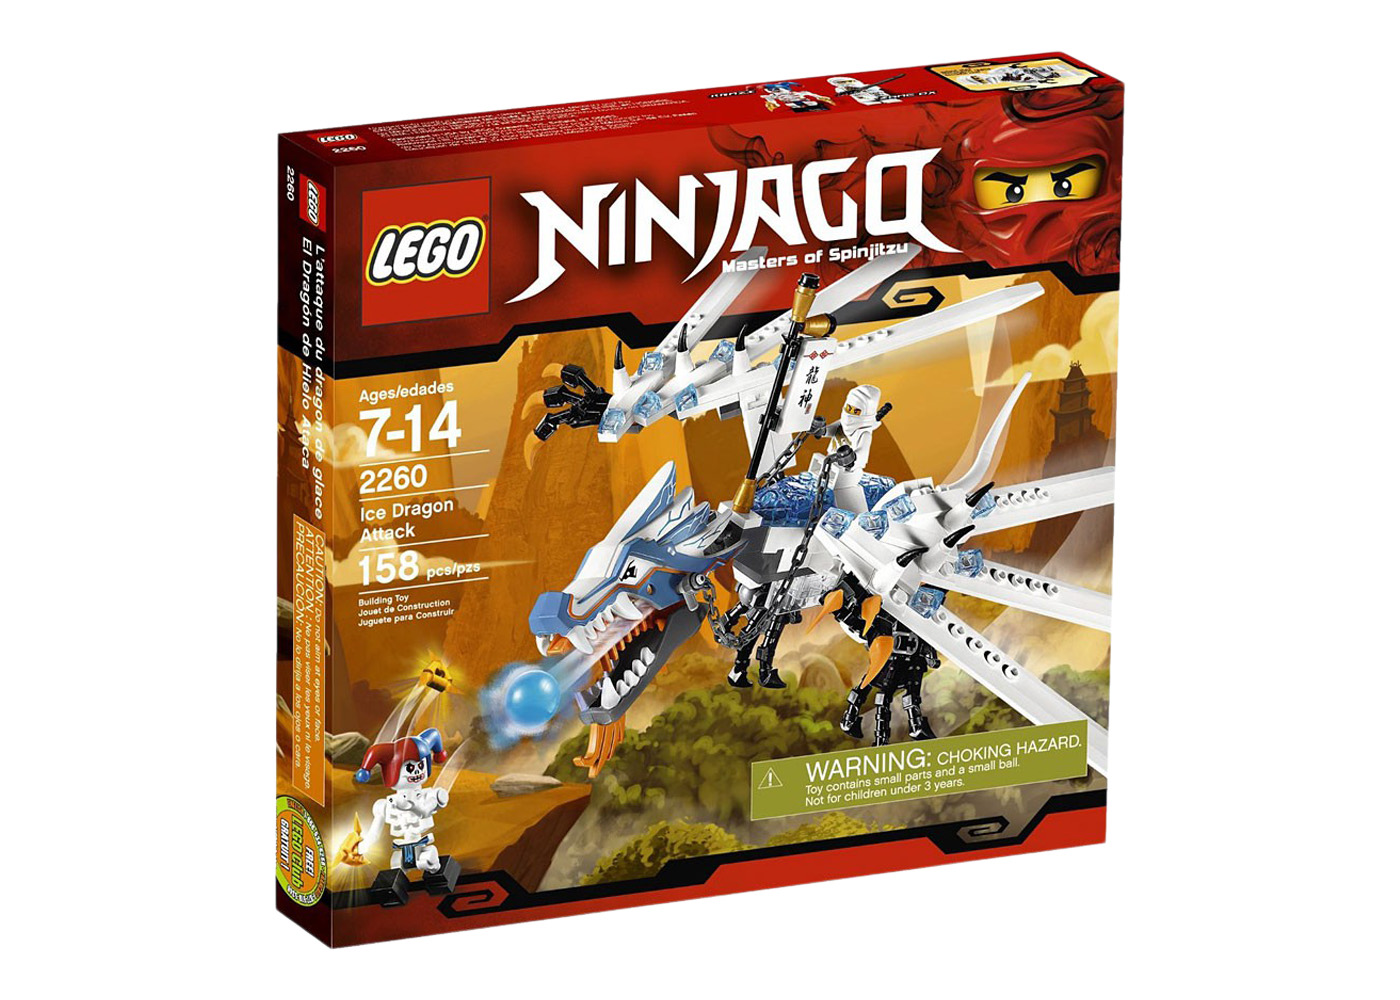 LEGO Ninjago Ice Dragon Attack Set 2260 - US